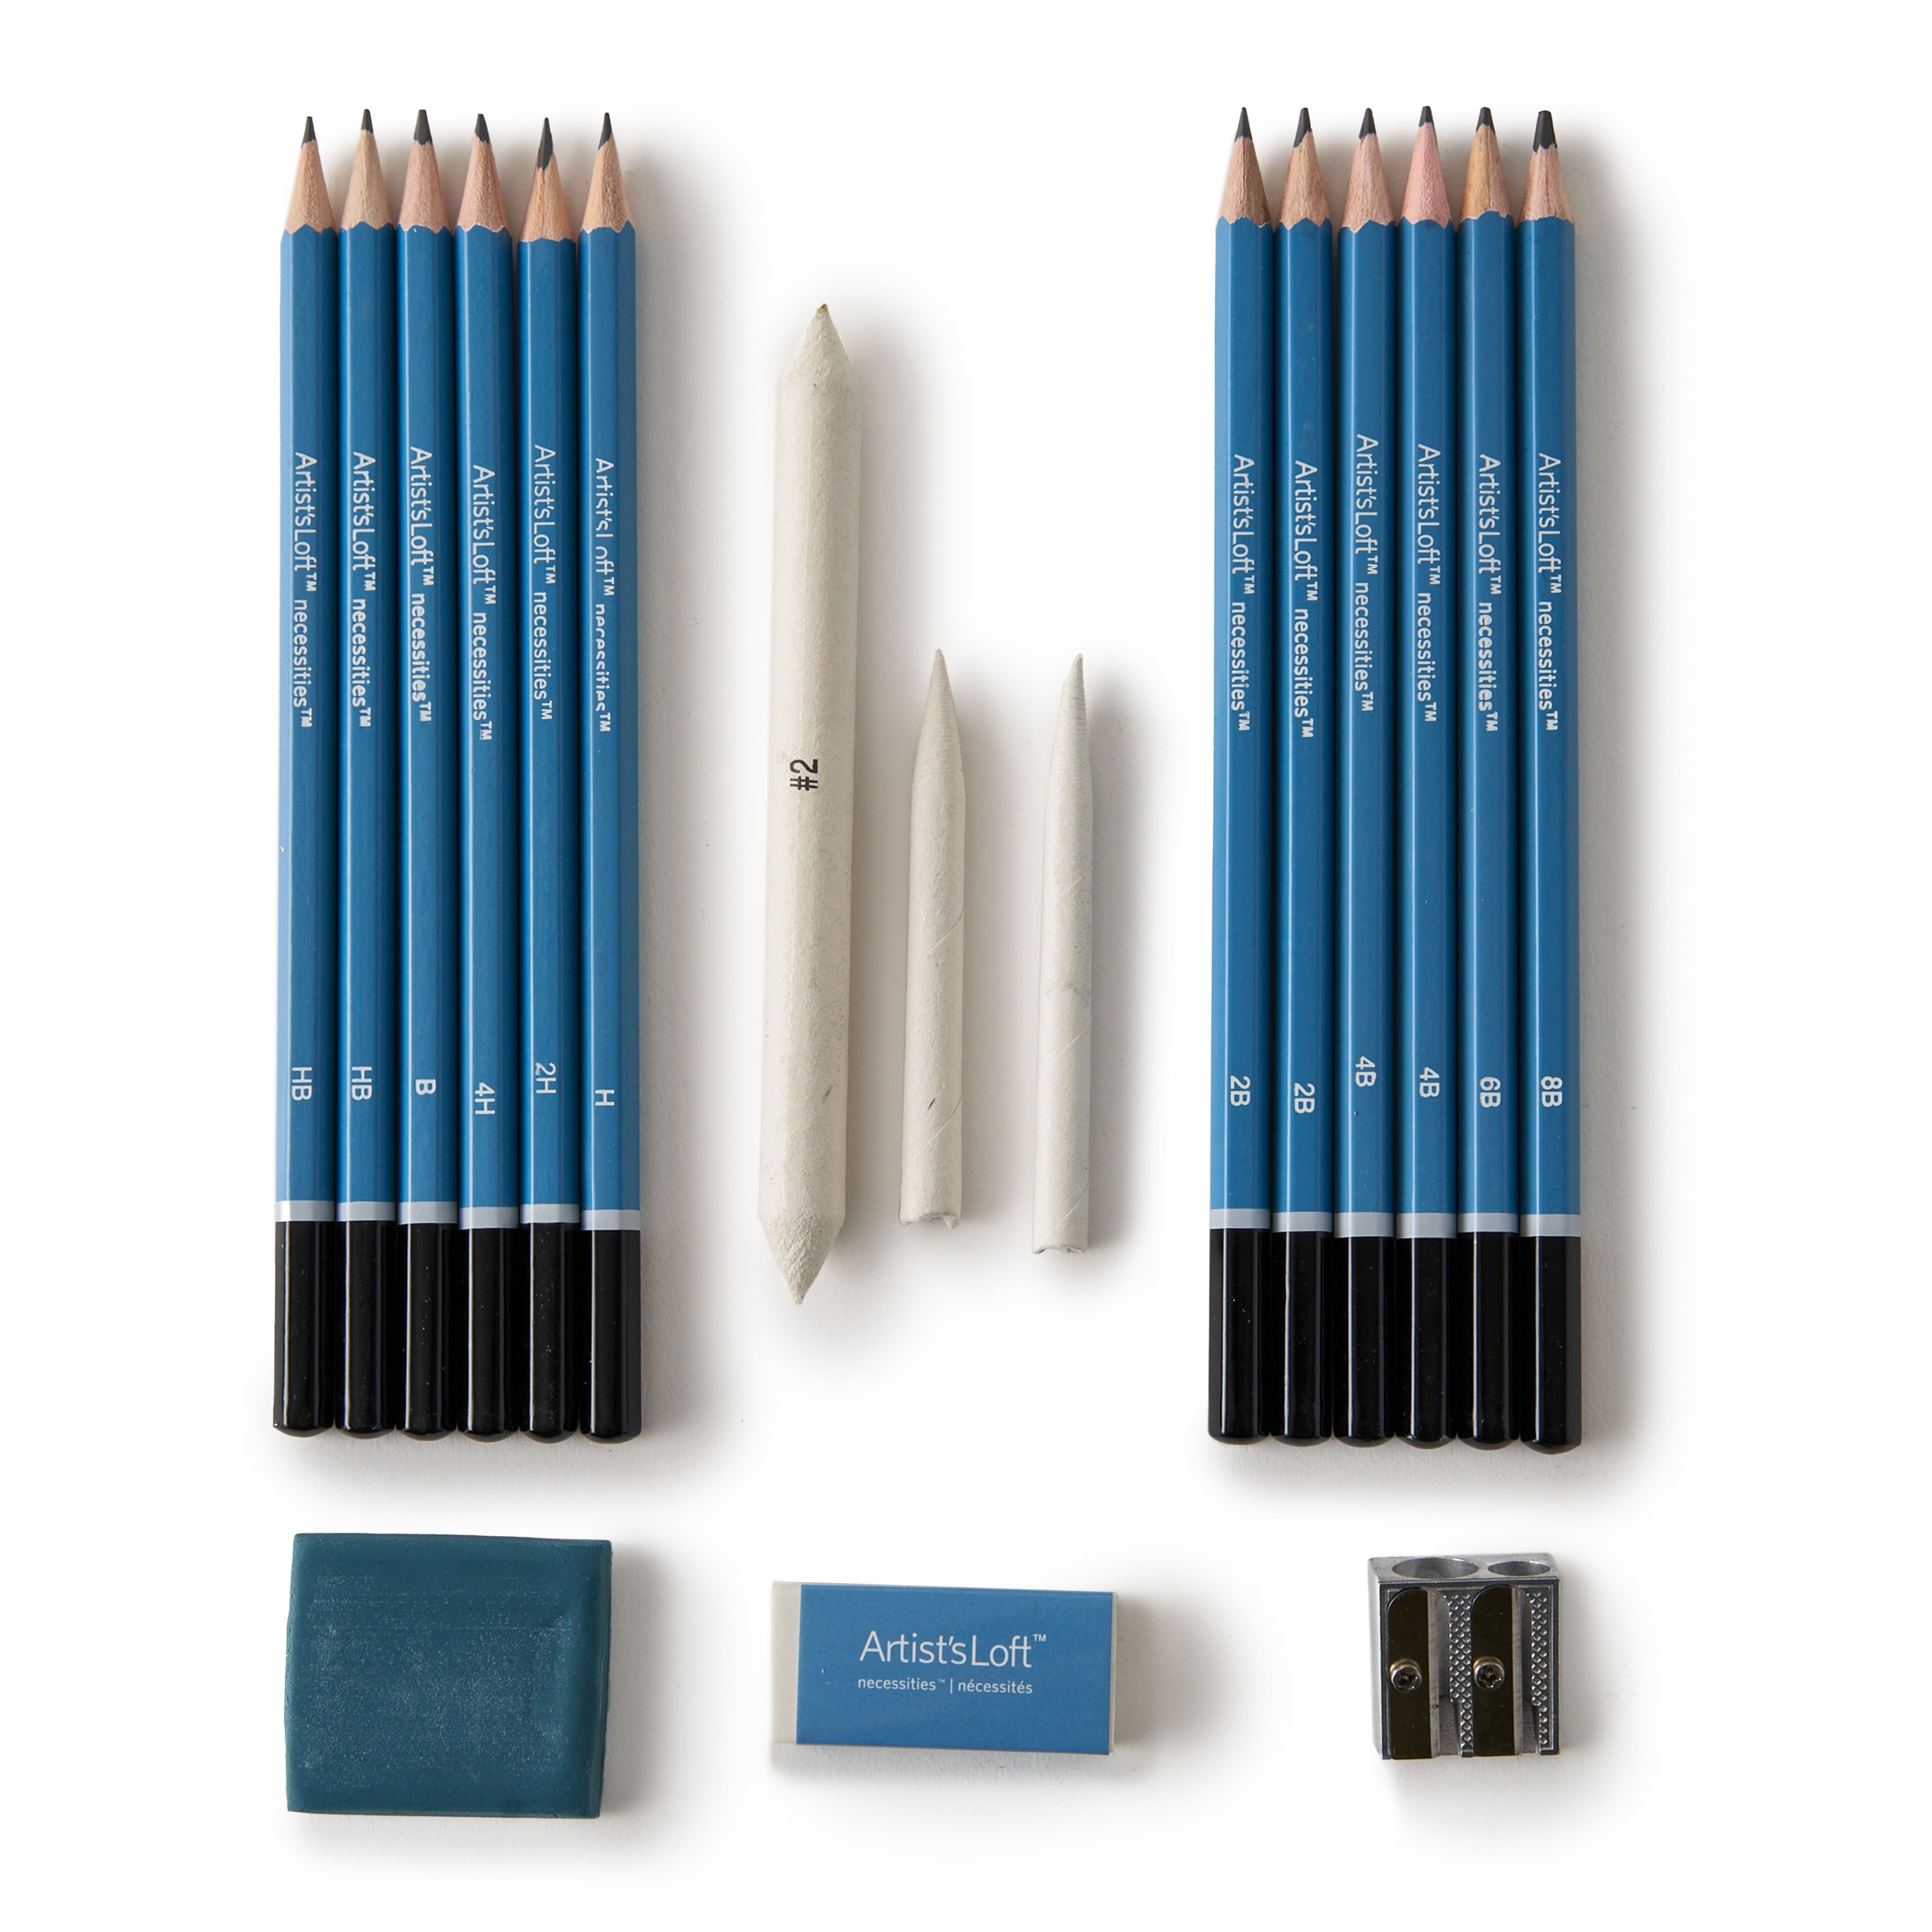 Amazon.com : RVOGJP TAMATA Professional Drawing Sketching Pencil Set - 12  Pieces Art Drawing Graphite Pencils(12B - 4H), Ideal for Drawing Art,  Sketching, Shading, for Beginners & Pro Artists : Arts, Crafts & Sewing